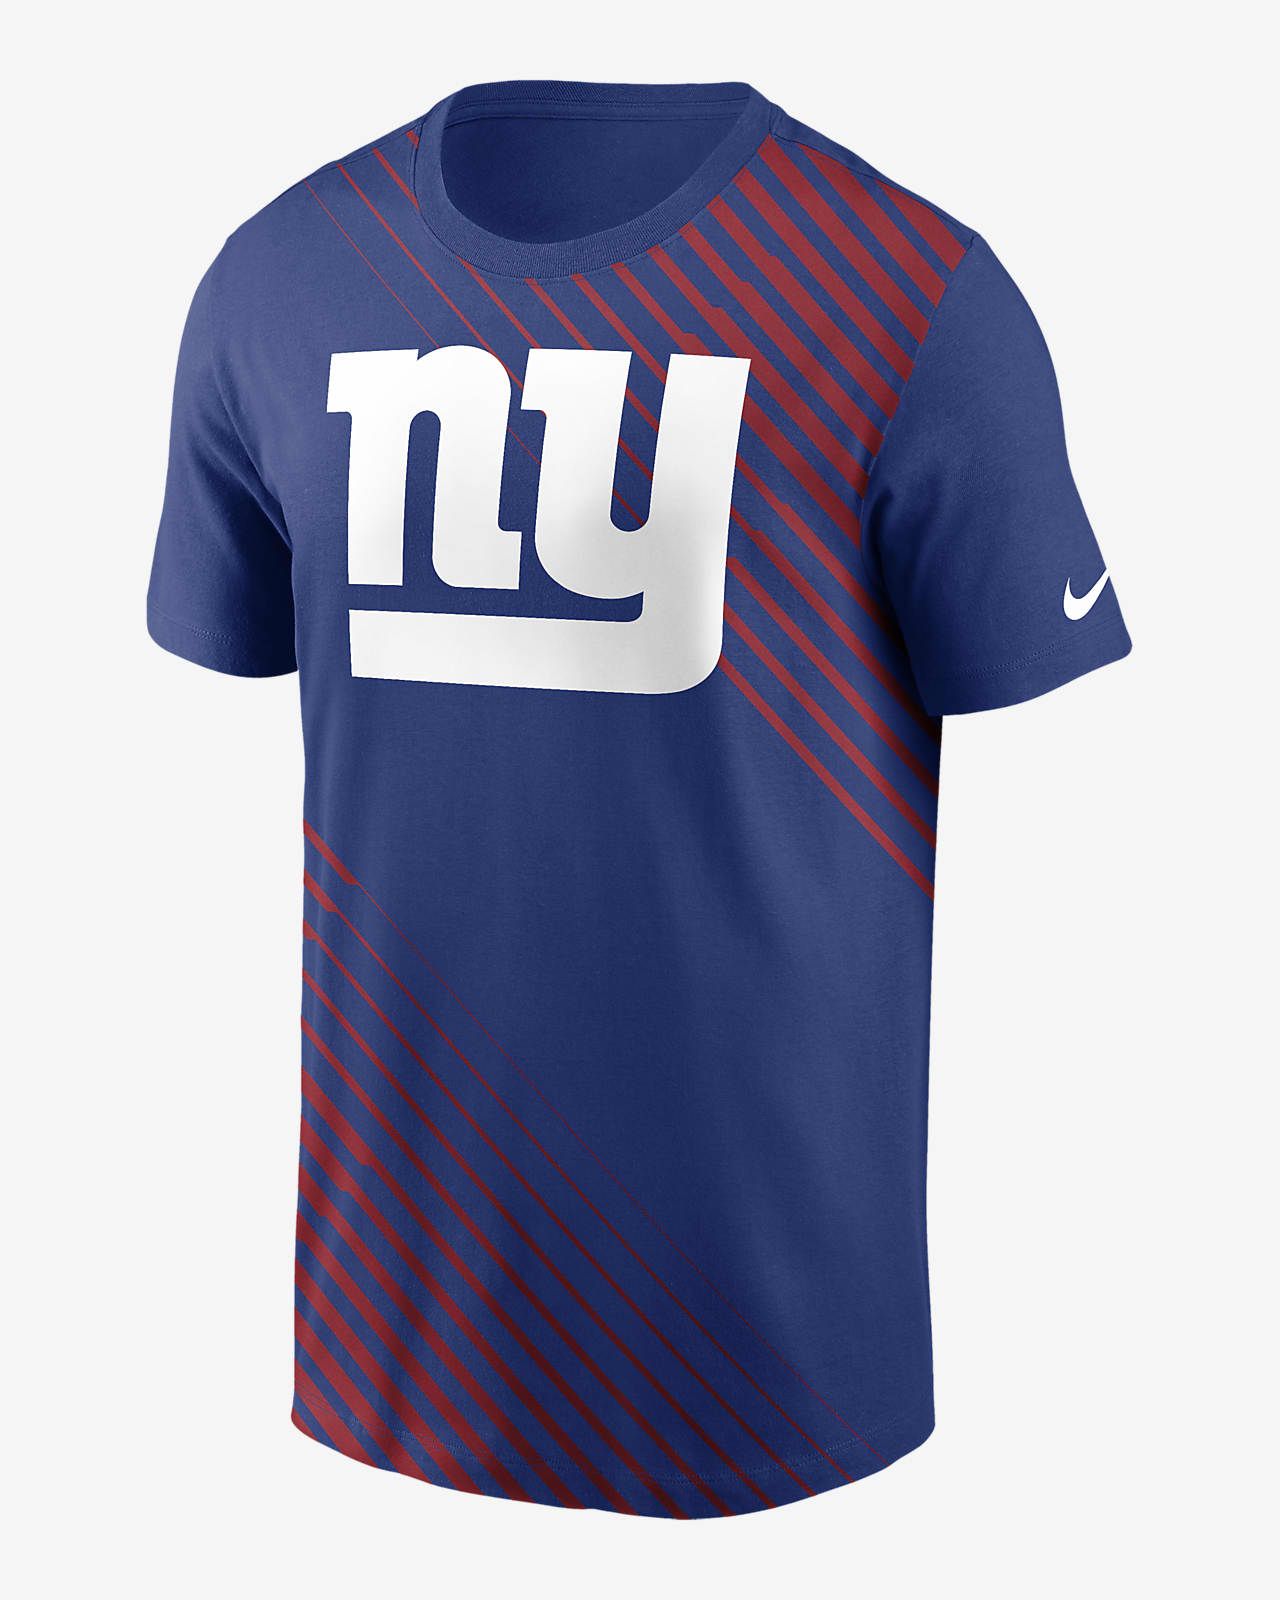 Men's Nike Royal New York Giants Yard Line Fashion Asbury T-Shirt